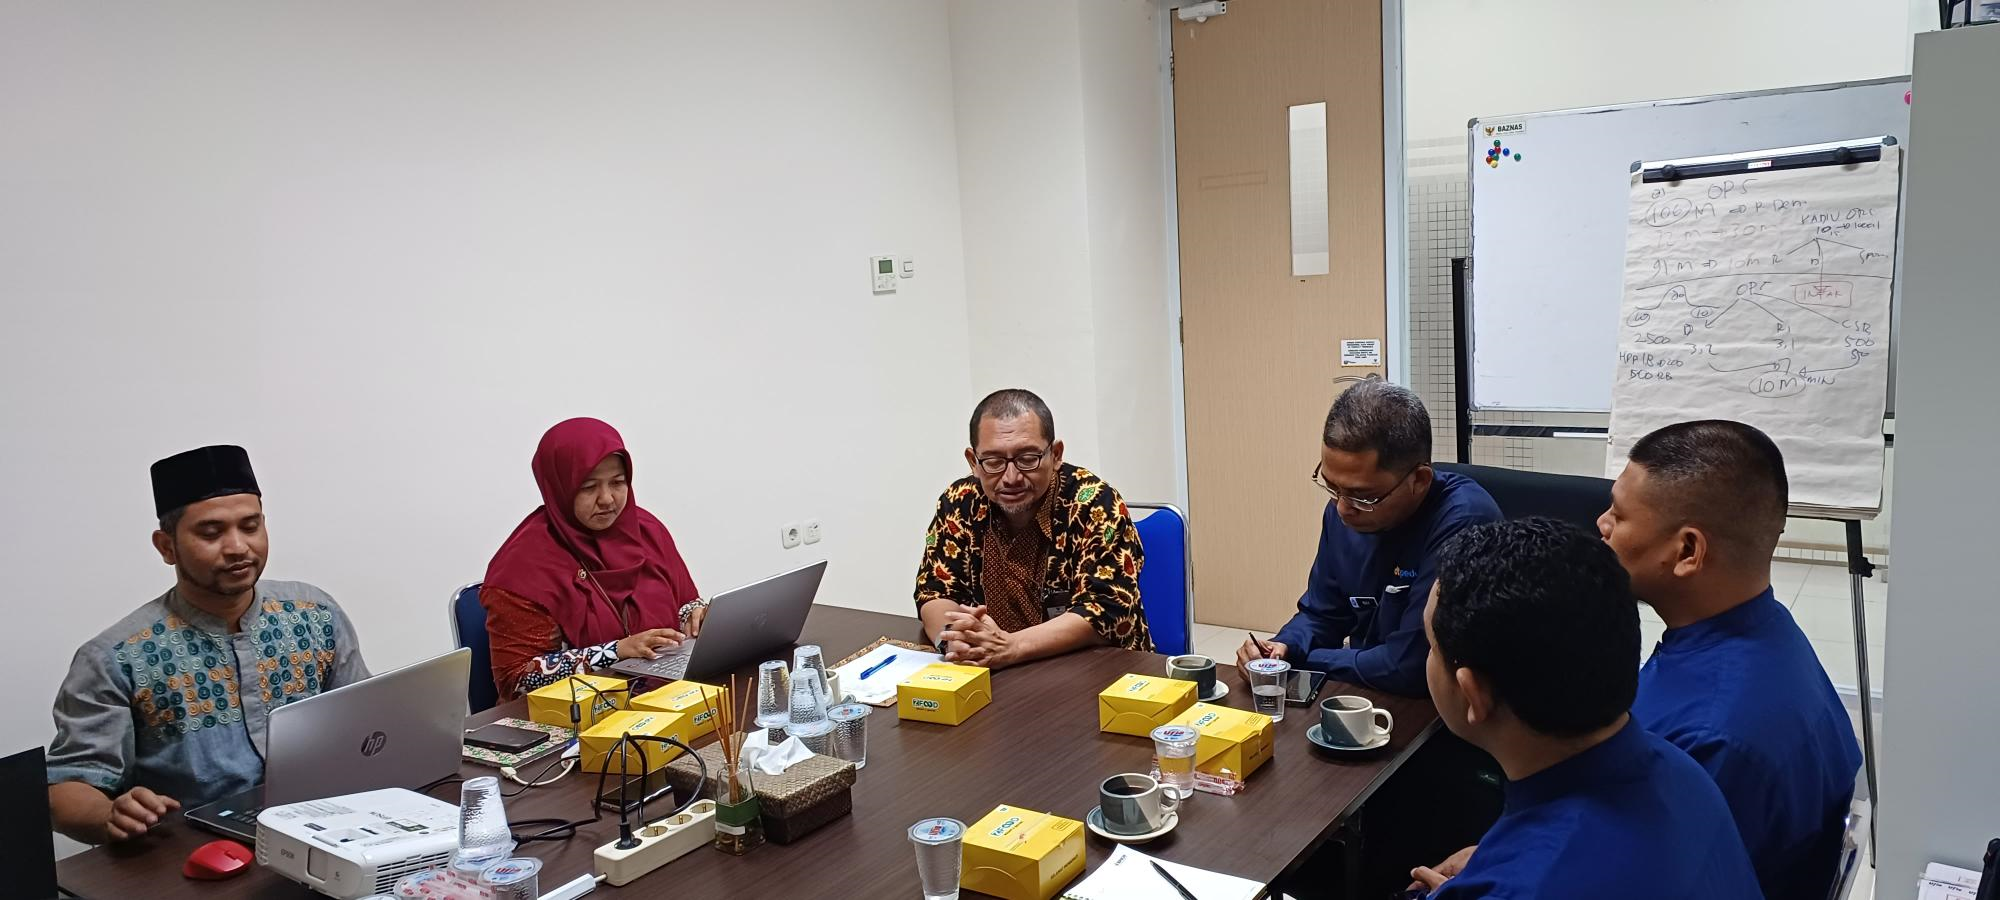 impinan Lembaga Amil Zakat Nasional (LAZNAS) Daarut Tauhiid (DT) Peduli mengunjungi Kantor Badan Amil Zakat Nasional (BAZNAS) Pusat, di Jalan Matraman Raya no. 134, Kebon Manggis, Jakarta, pada Senin 13 Maret 2023 lalu.